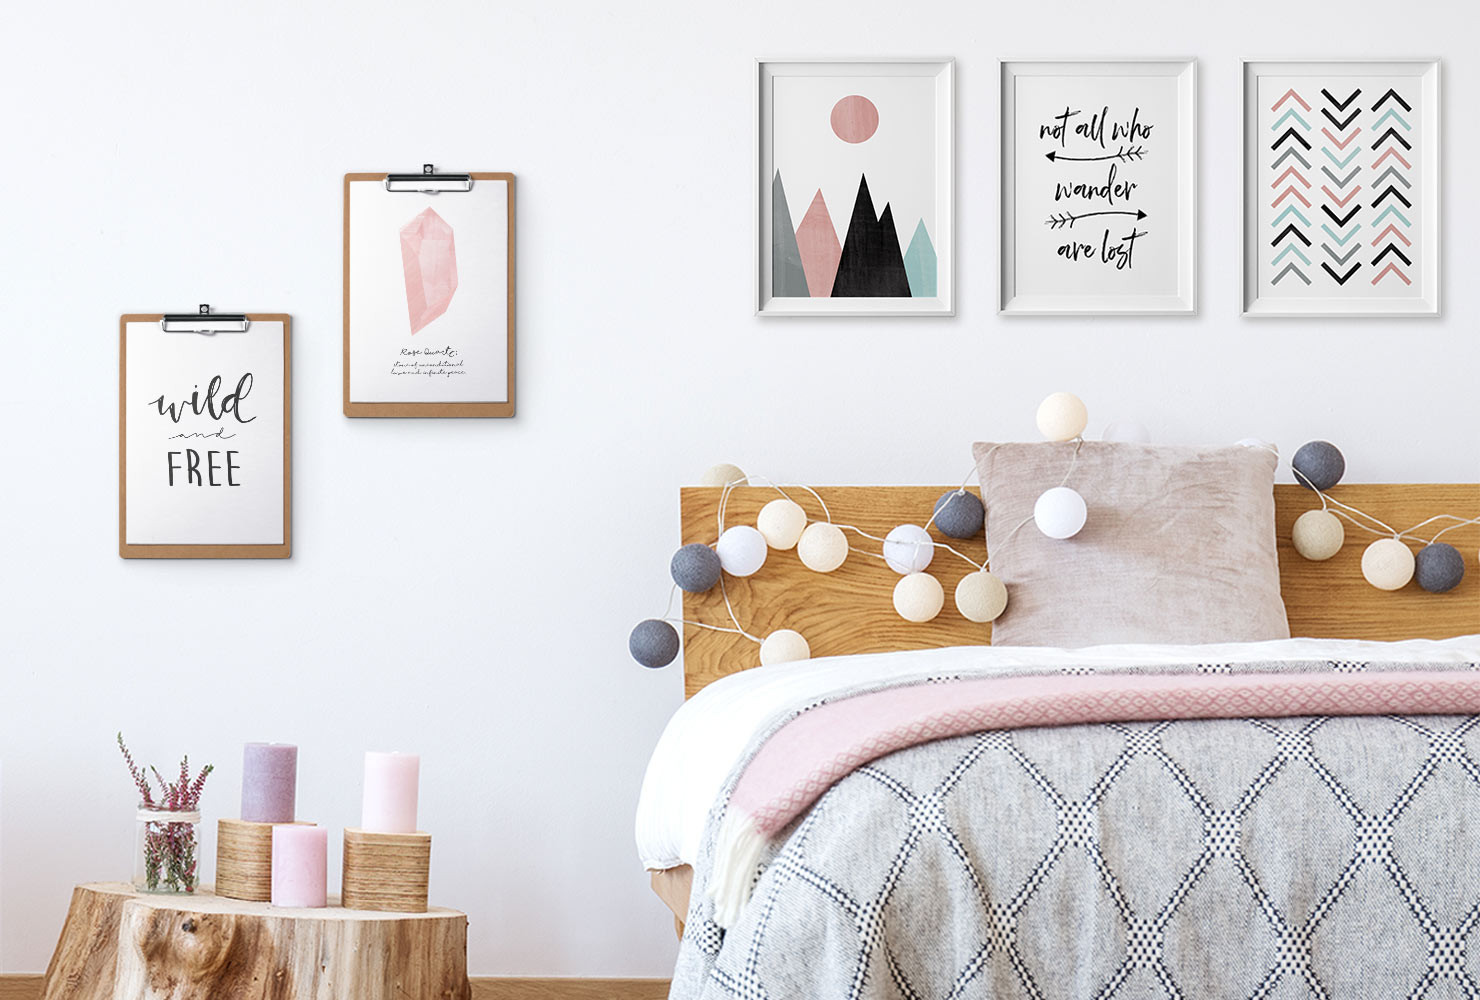 DIY Bedroom Wall Decorations
 24 DIY Bedroom Decor Ideas To Inspire You With Printables